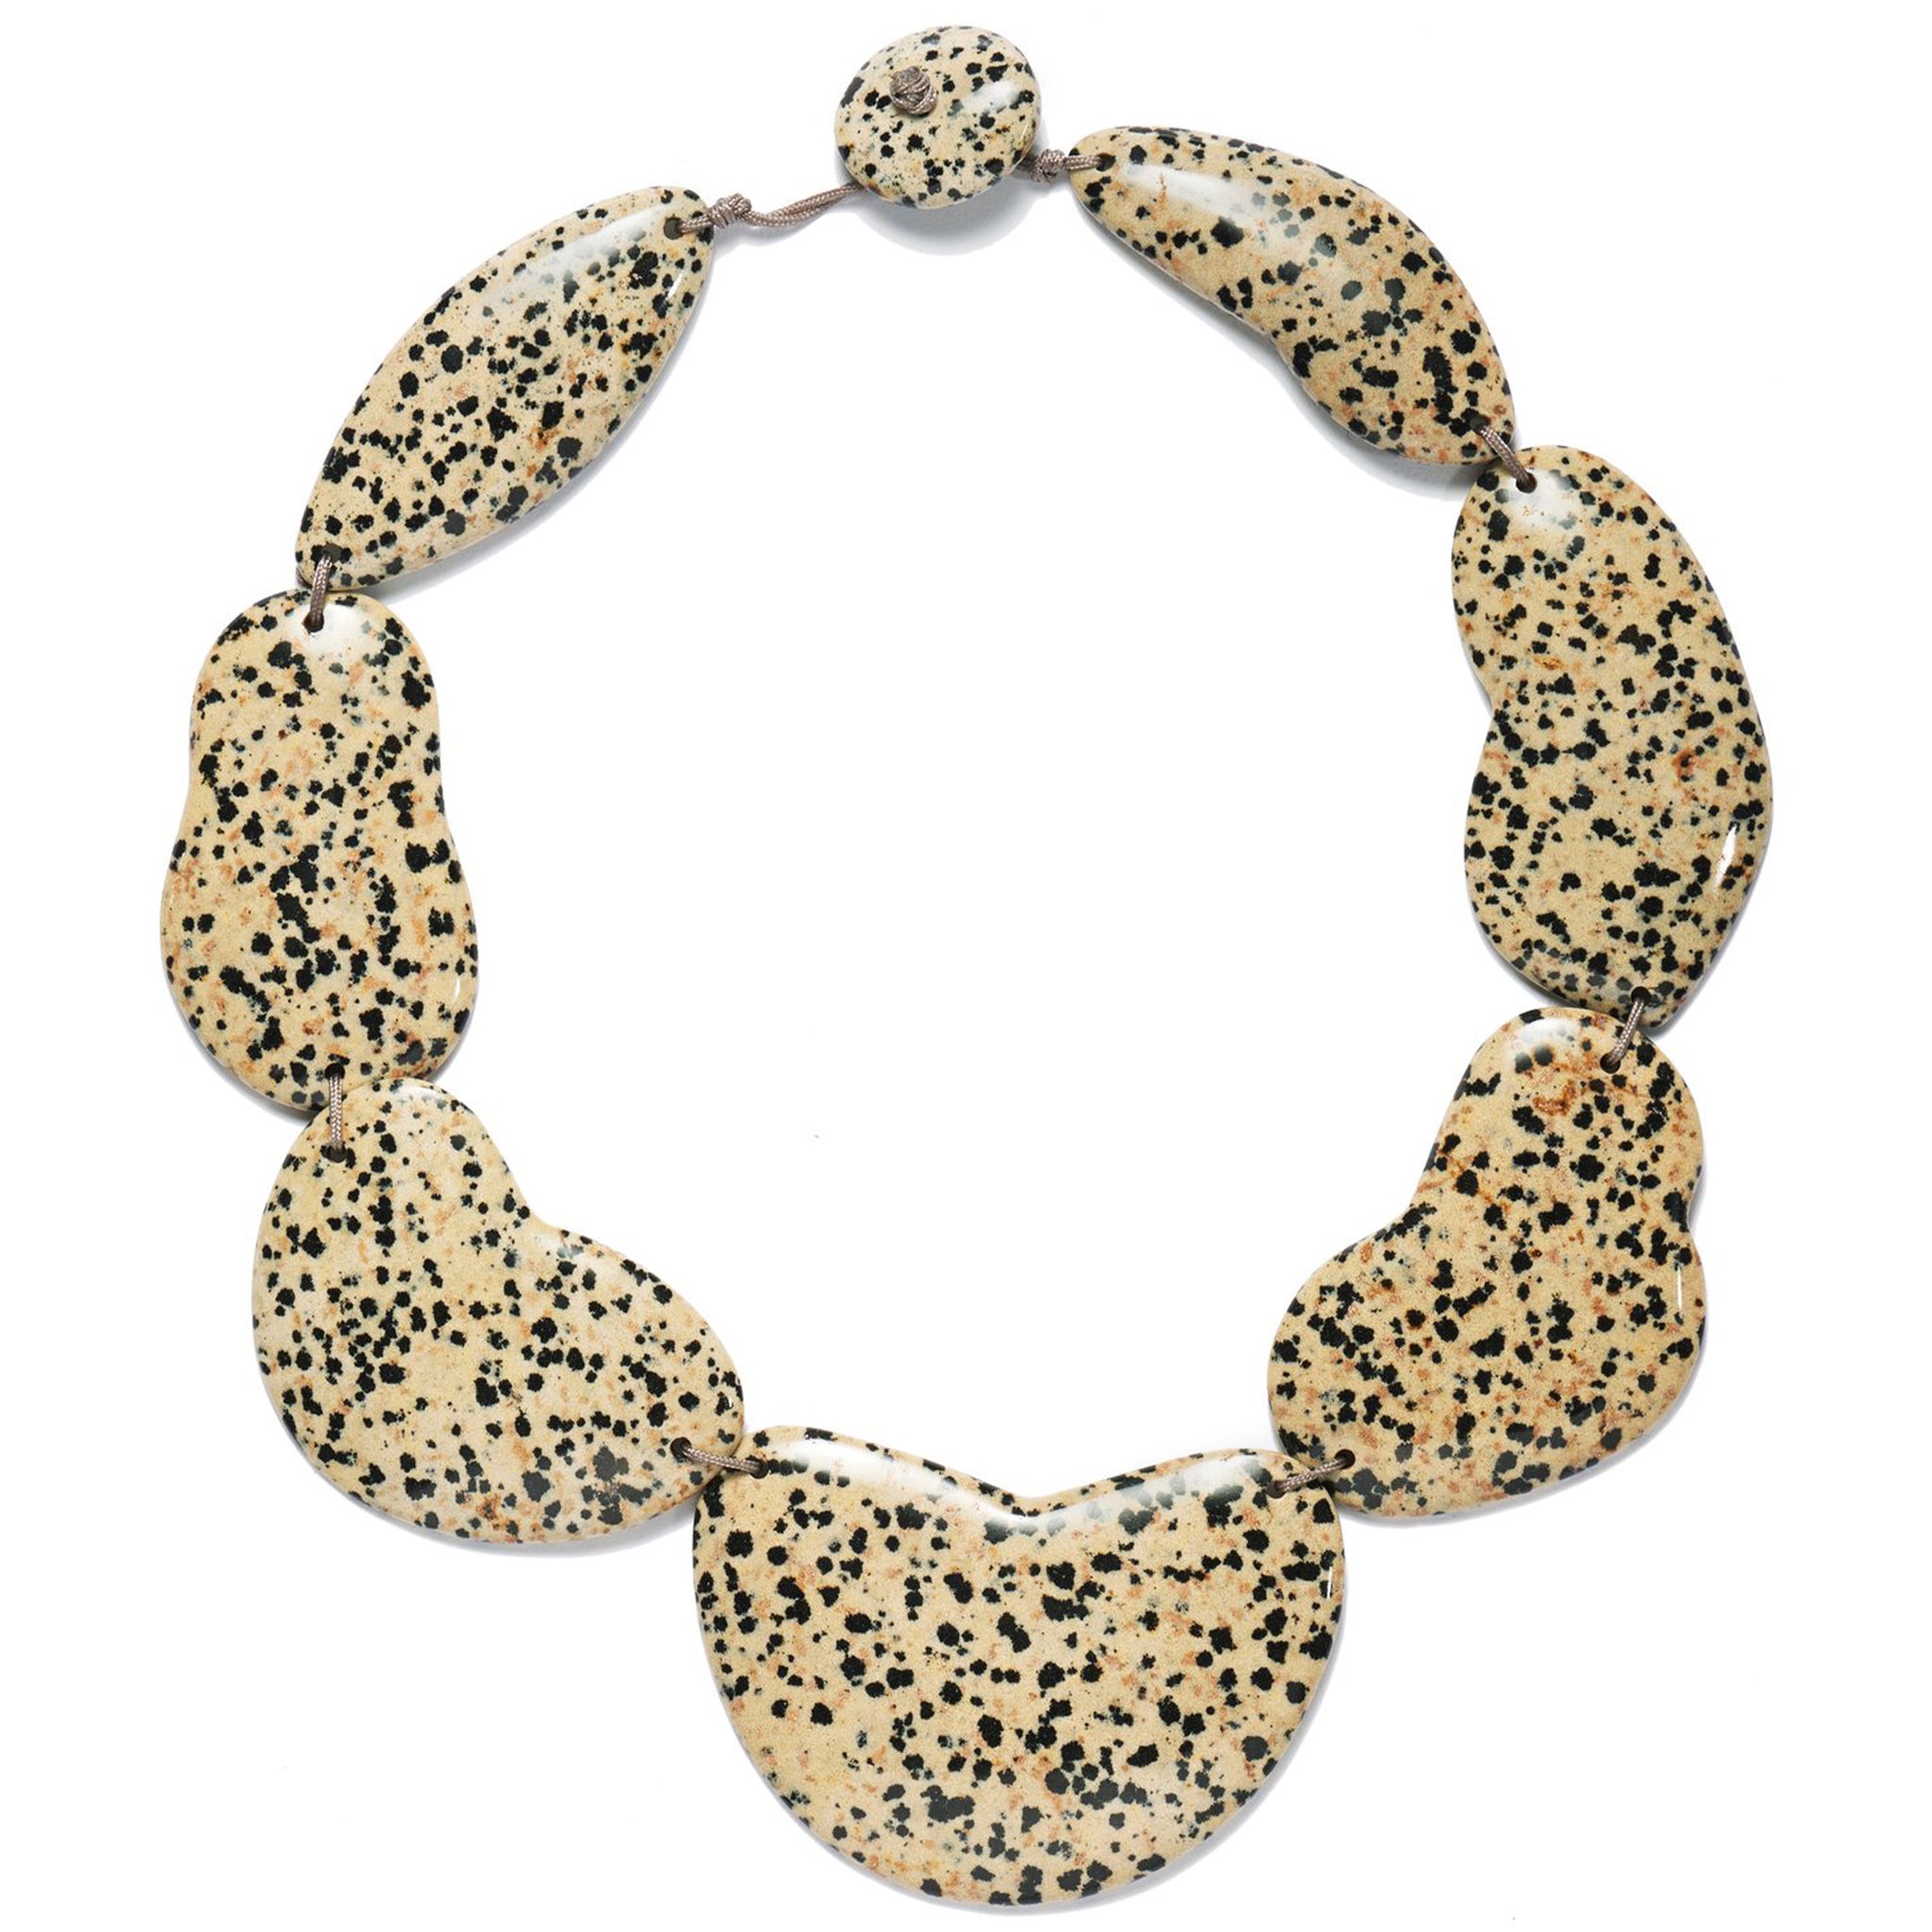 Dalmatian Jasper Gemstone Necklace